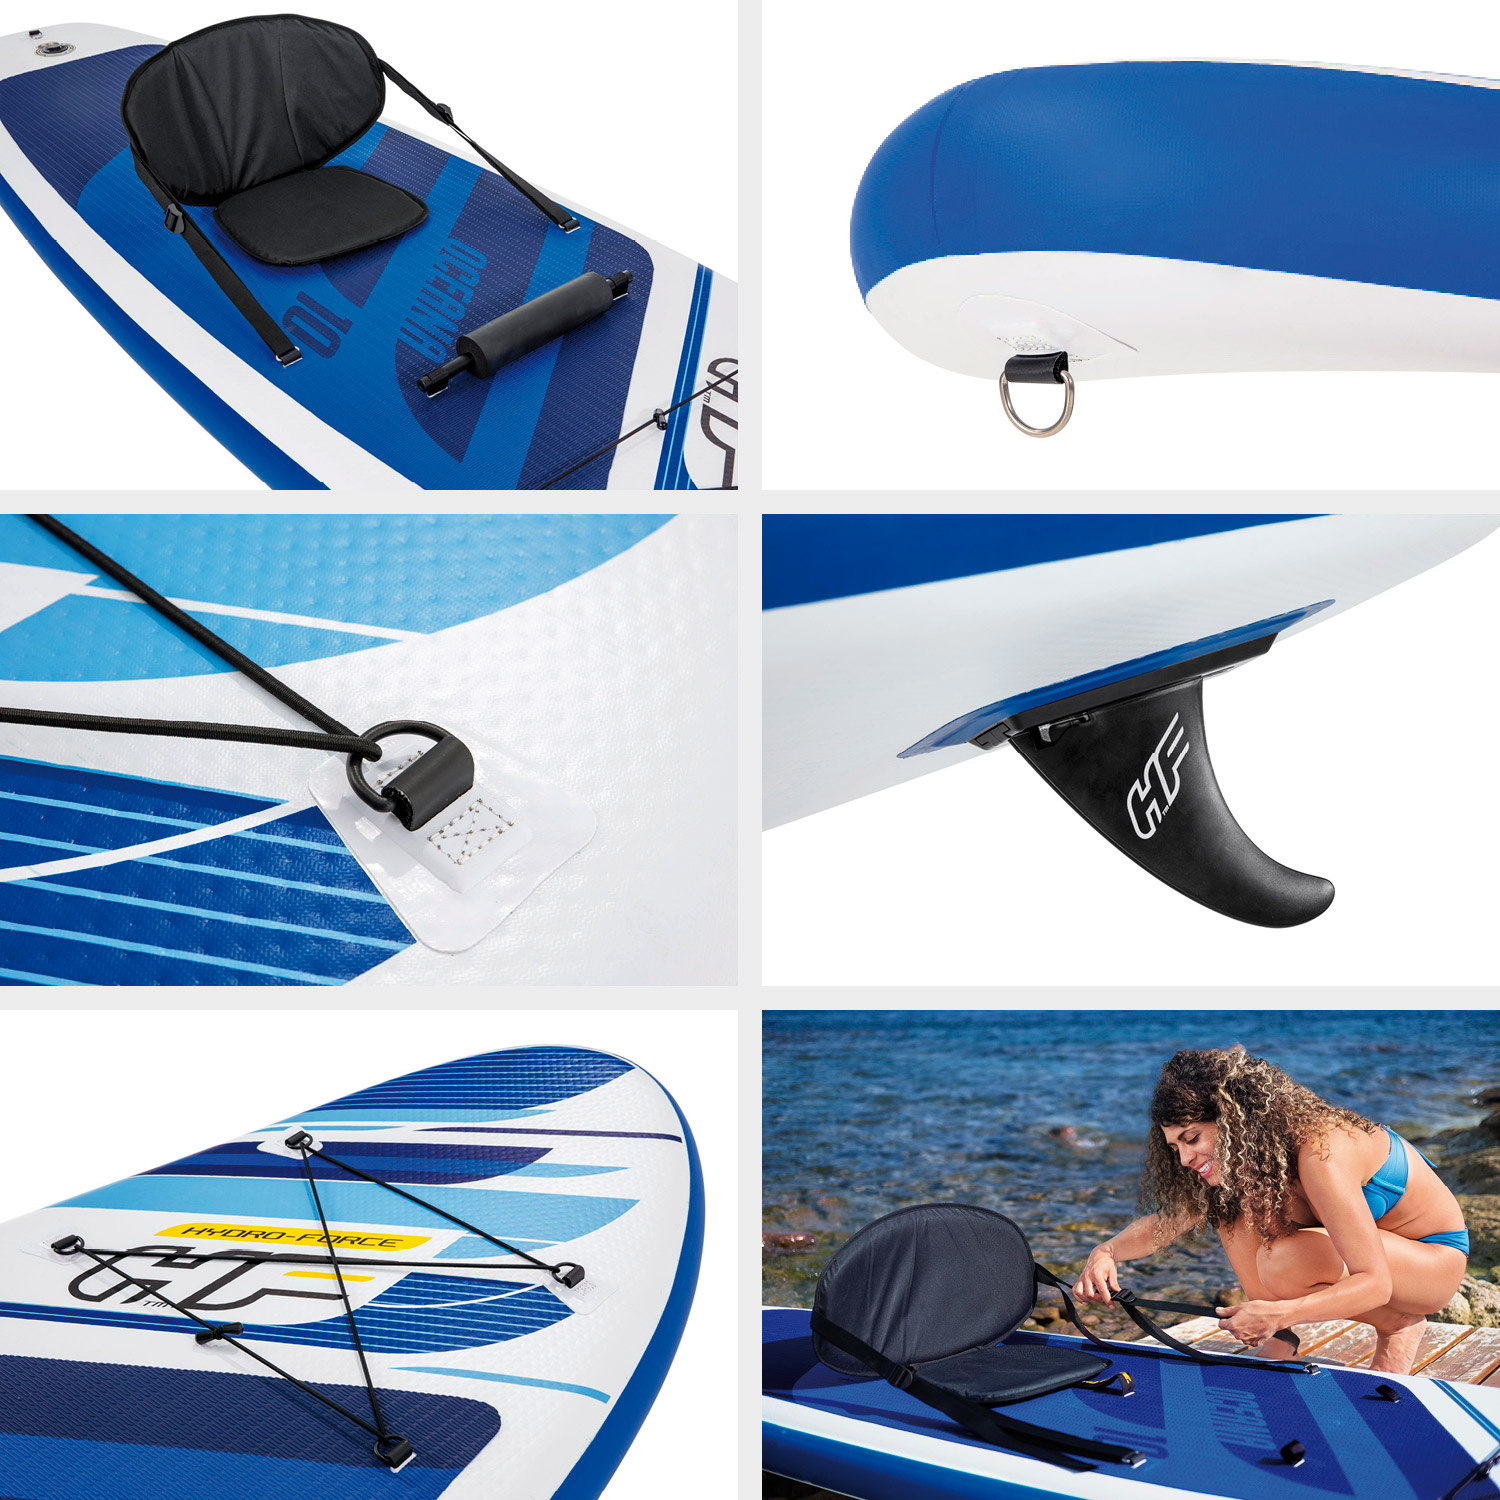 Hydro force Oceana convertible SUP board set